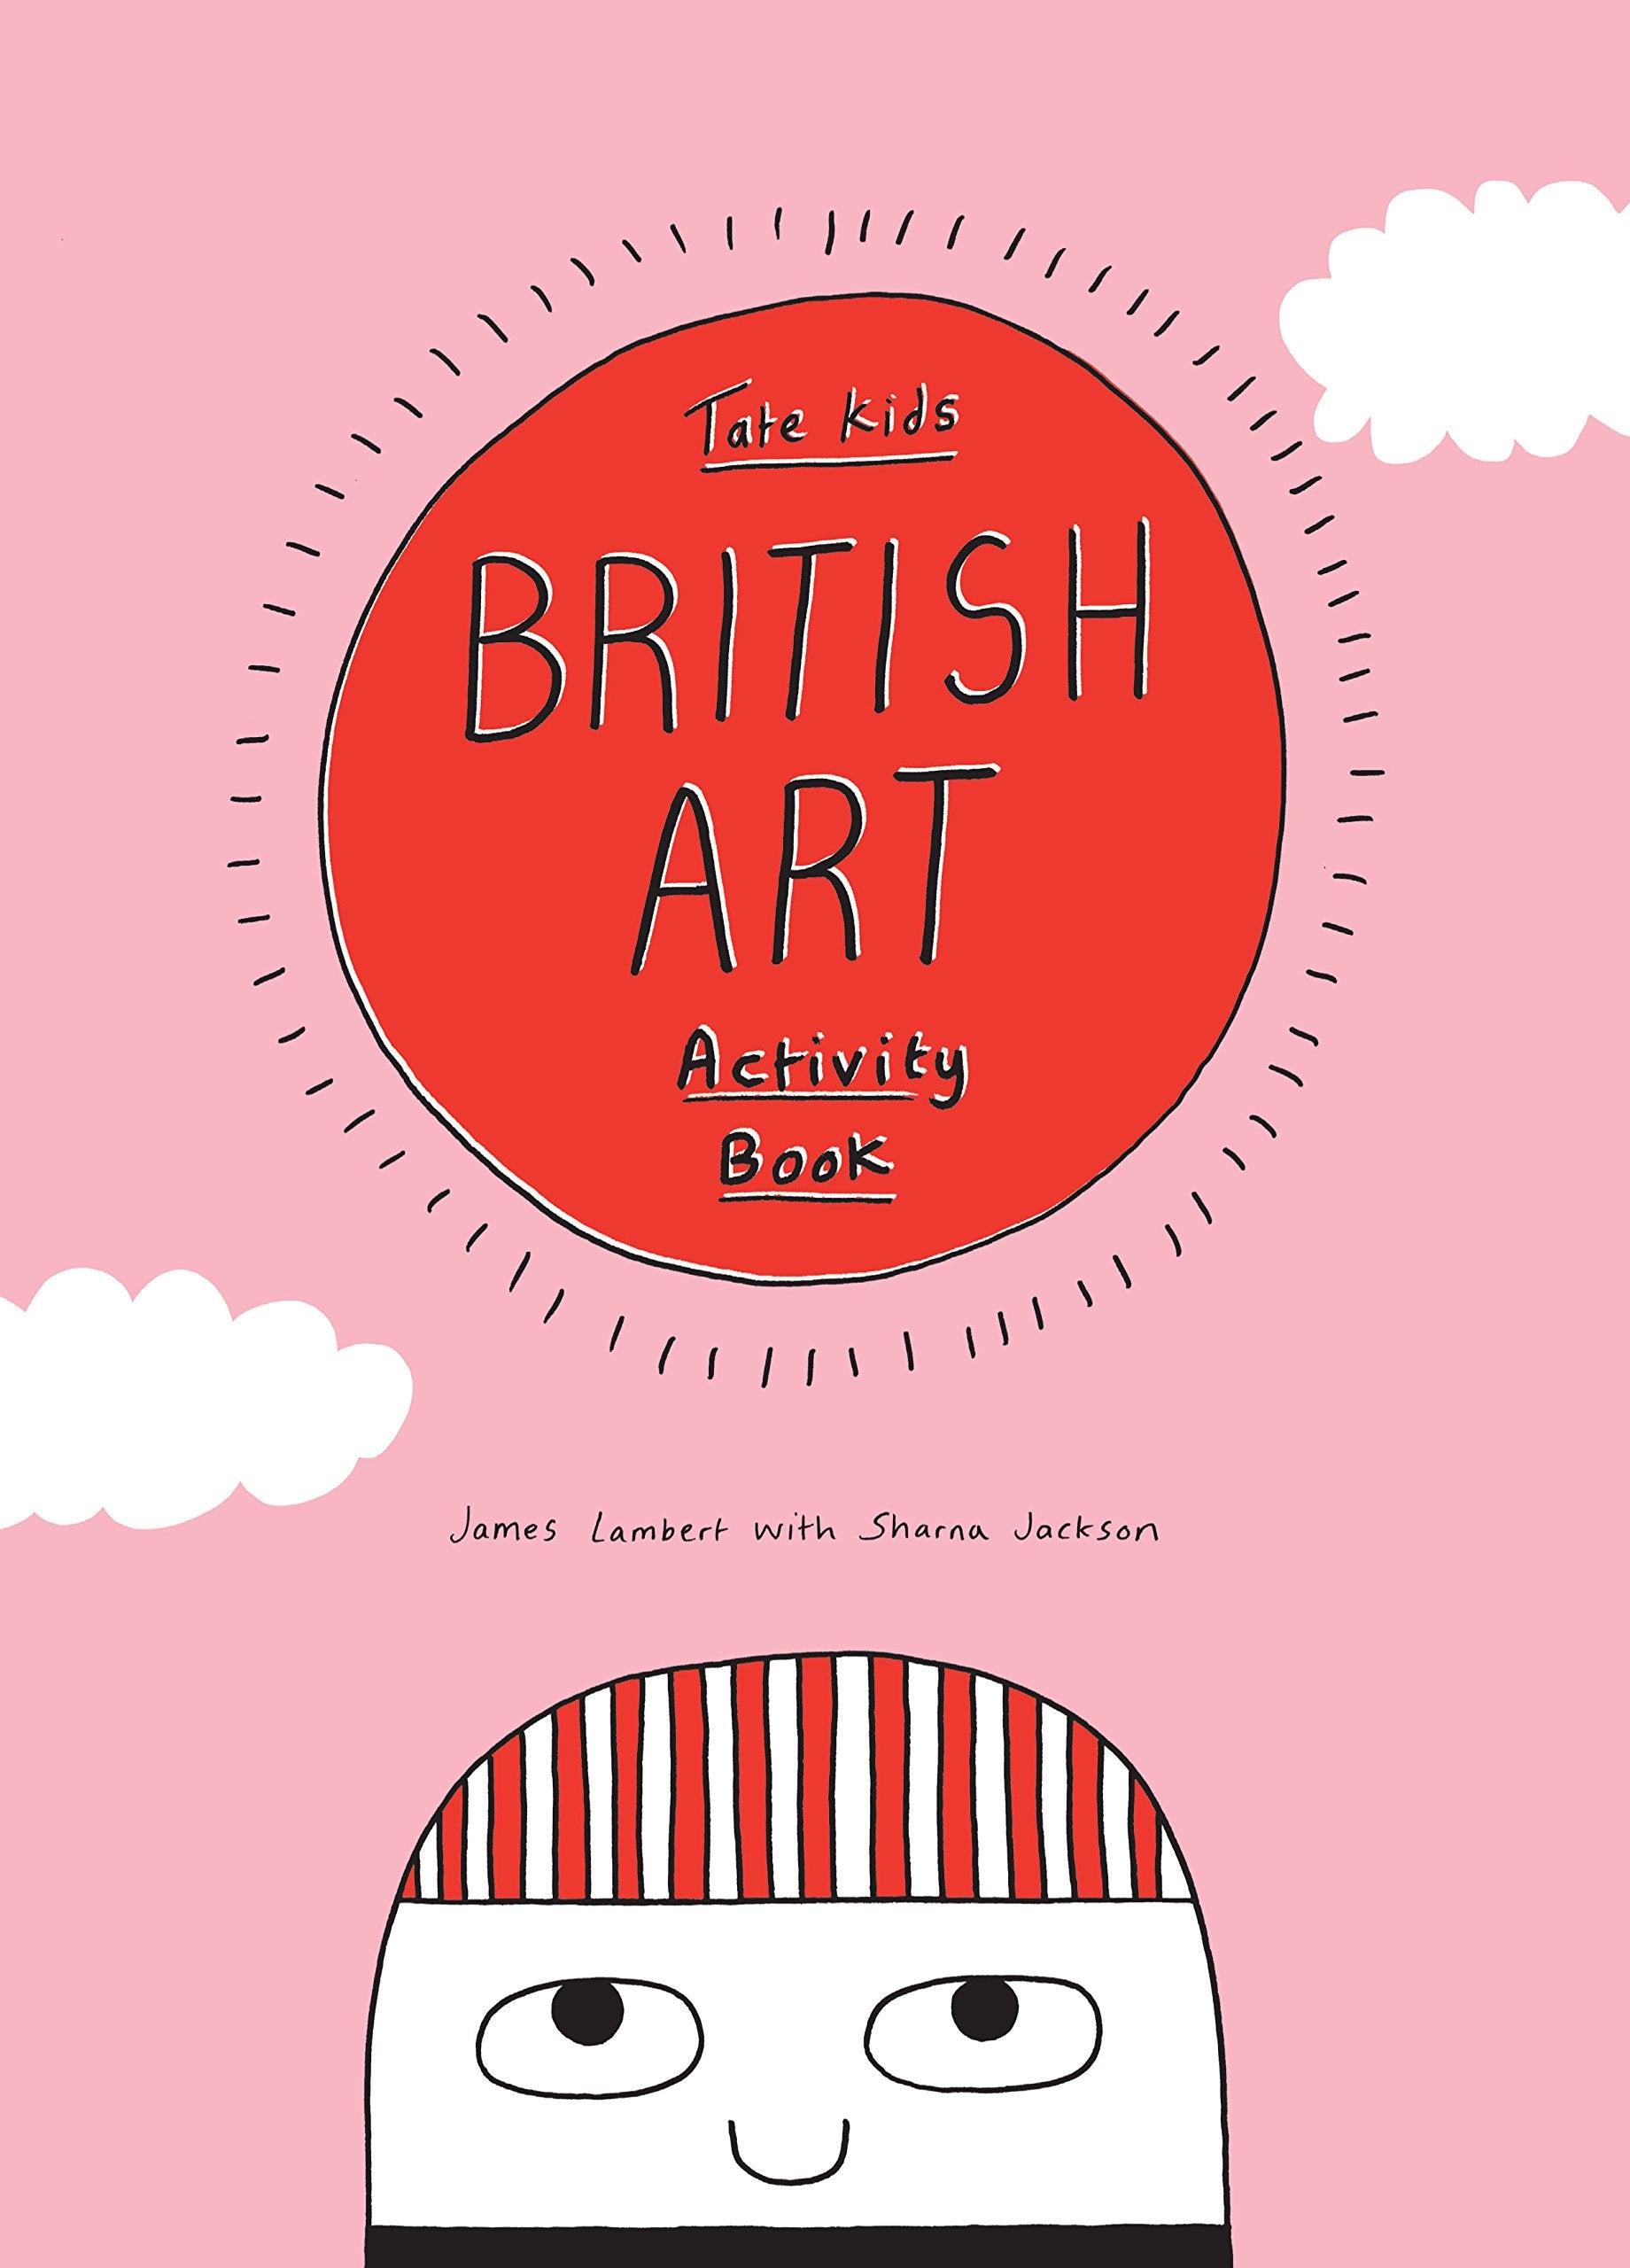 Tate Kids British Art Activity Book - Me Books Asia Store